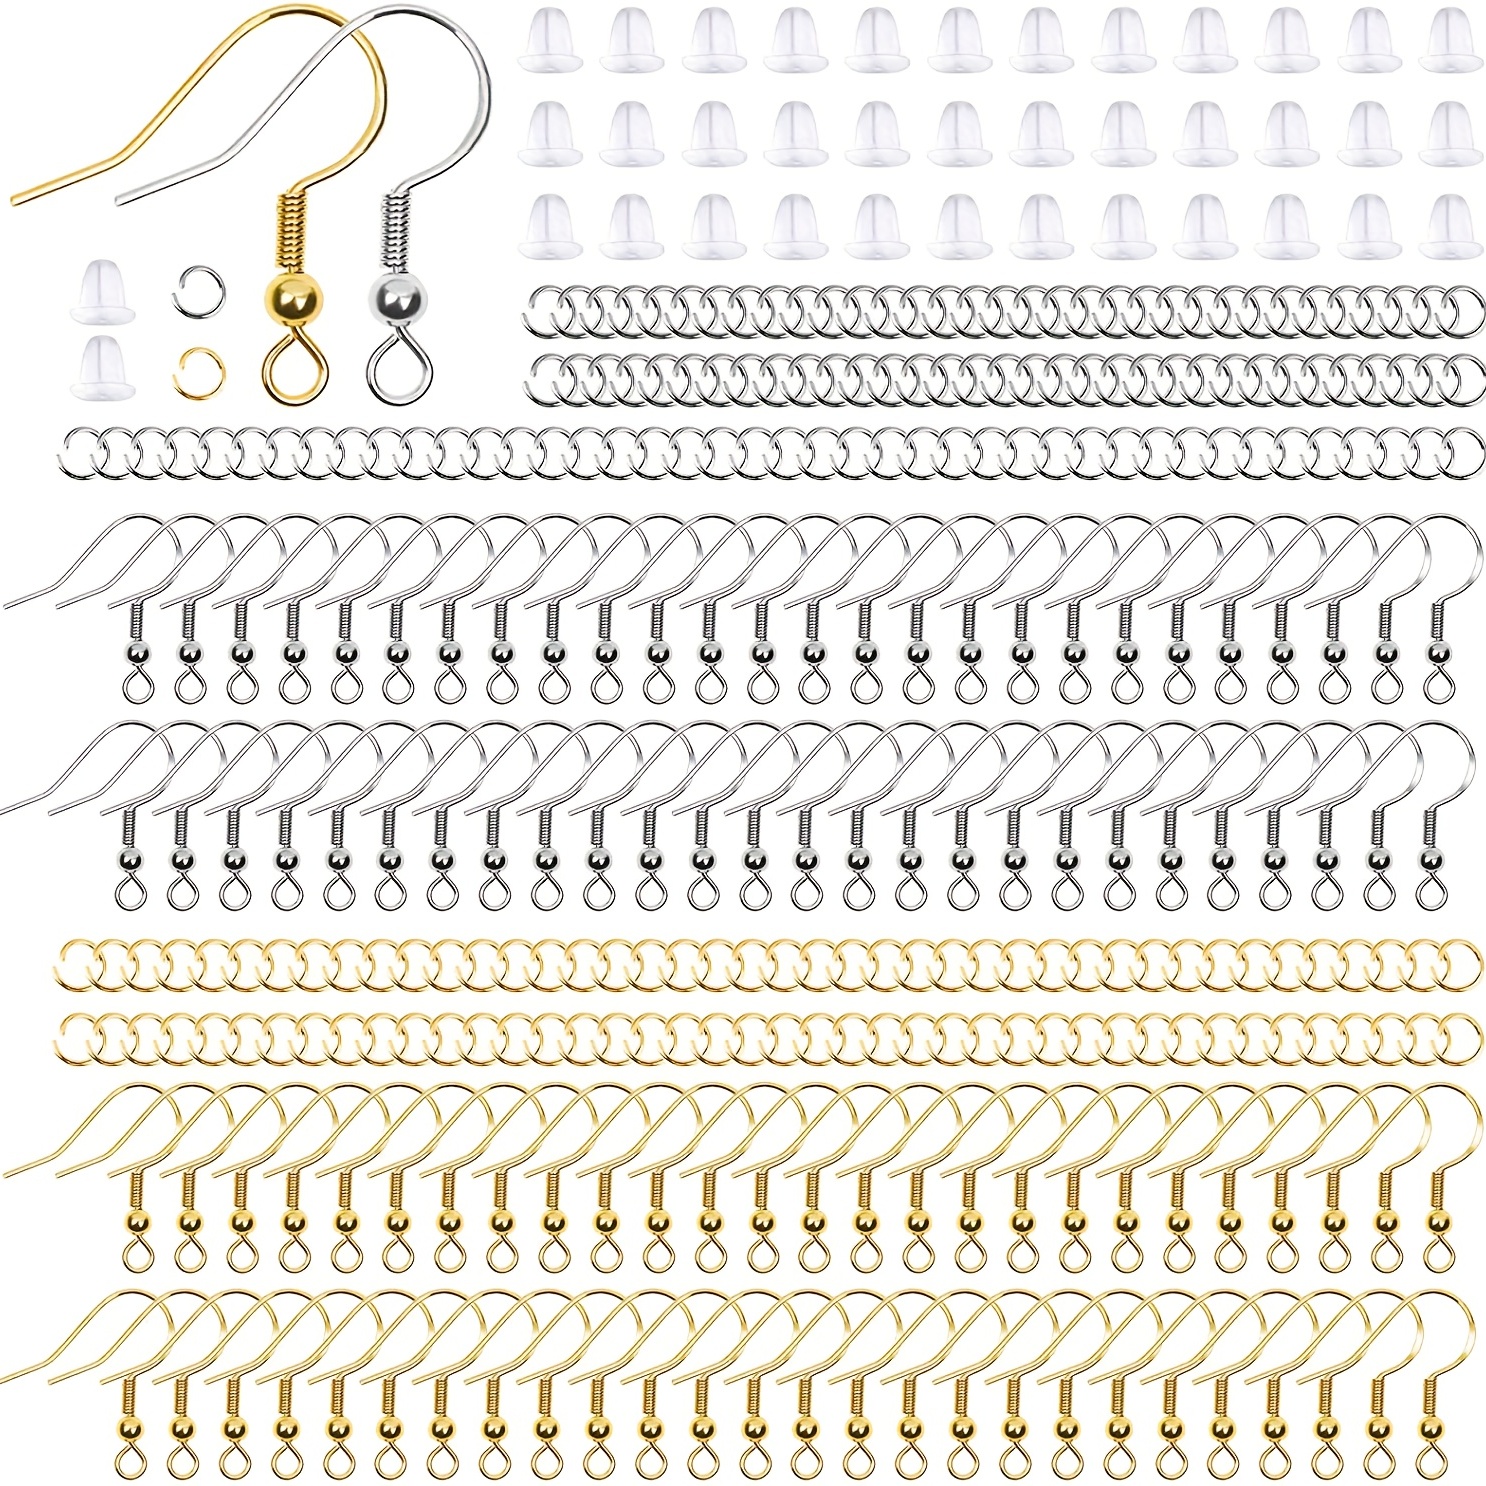 2400Pcs Earring Making Supplies Kit With 24 Style Earring Hooks, Earring  Backs, Earrings Posts For Diy Earrings